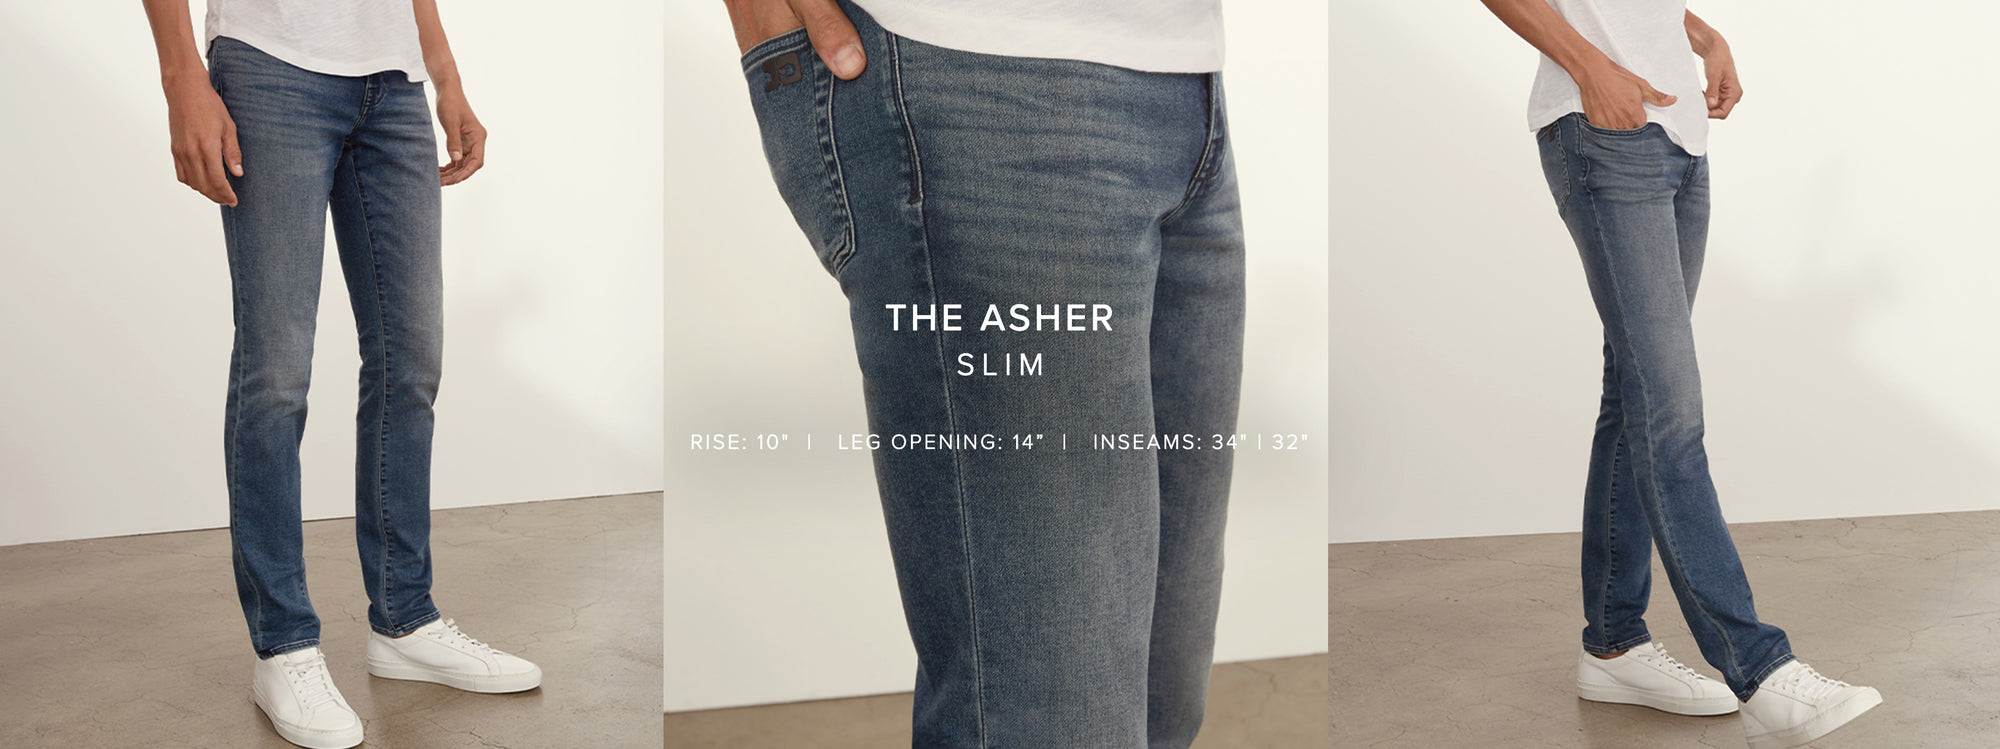 Men / Denim / Style / Asher Slim's Collection Banner Image